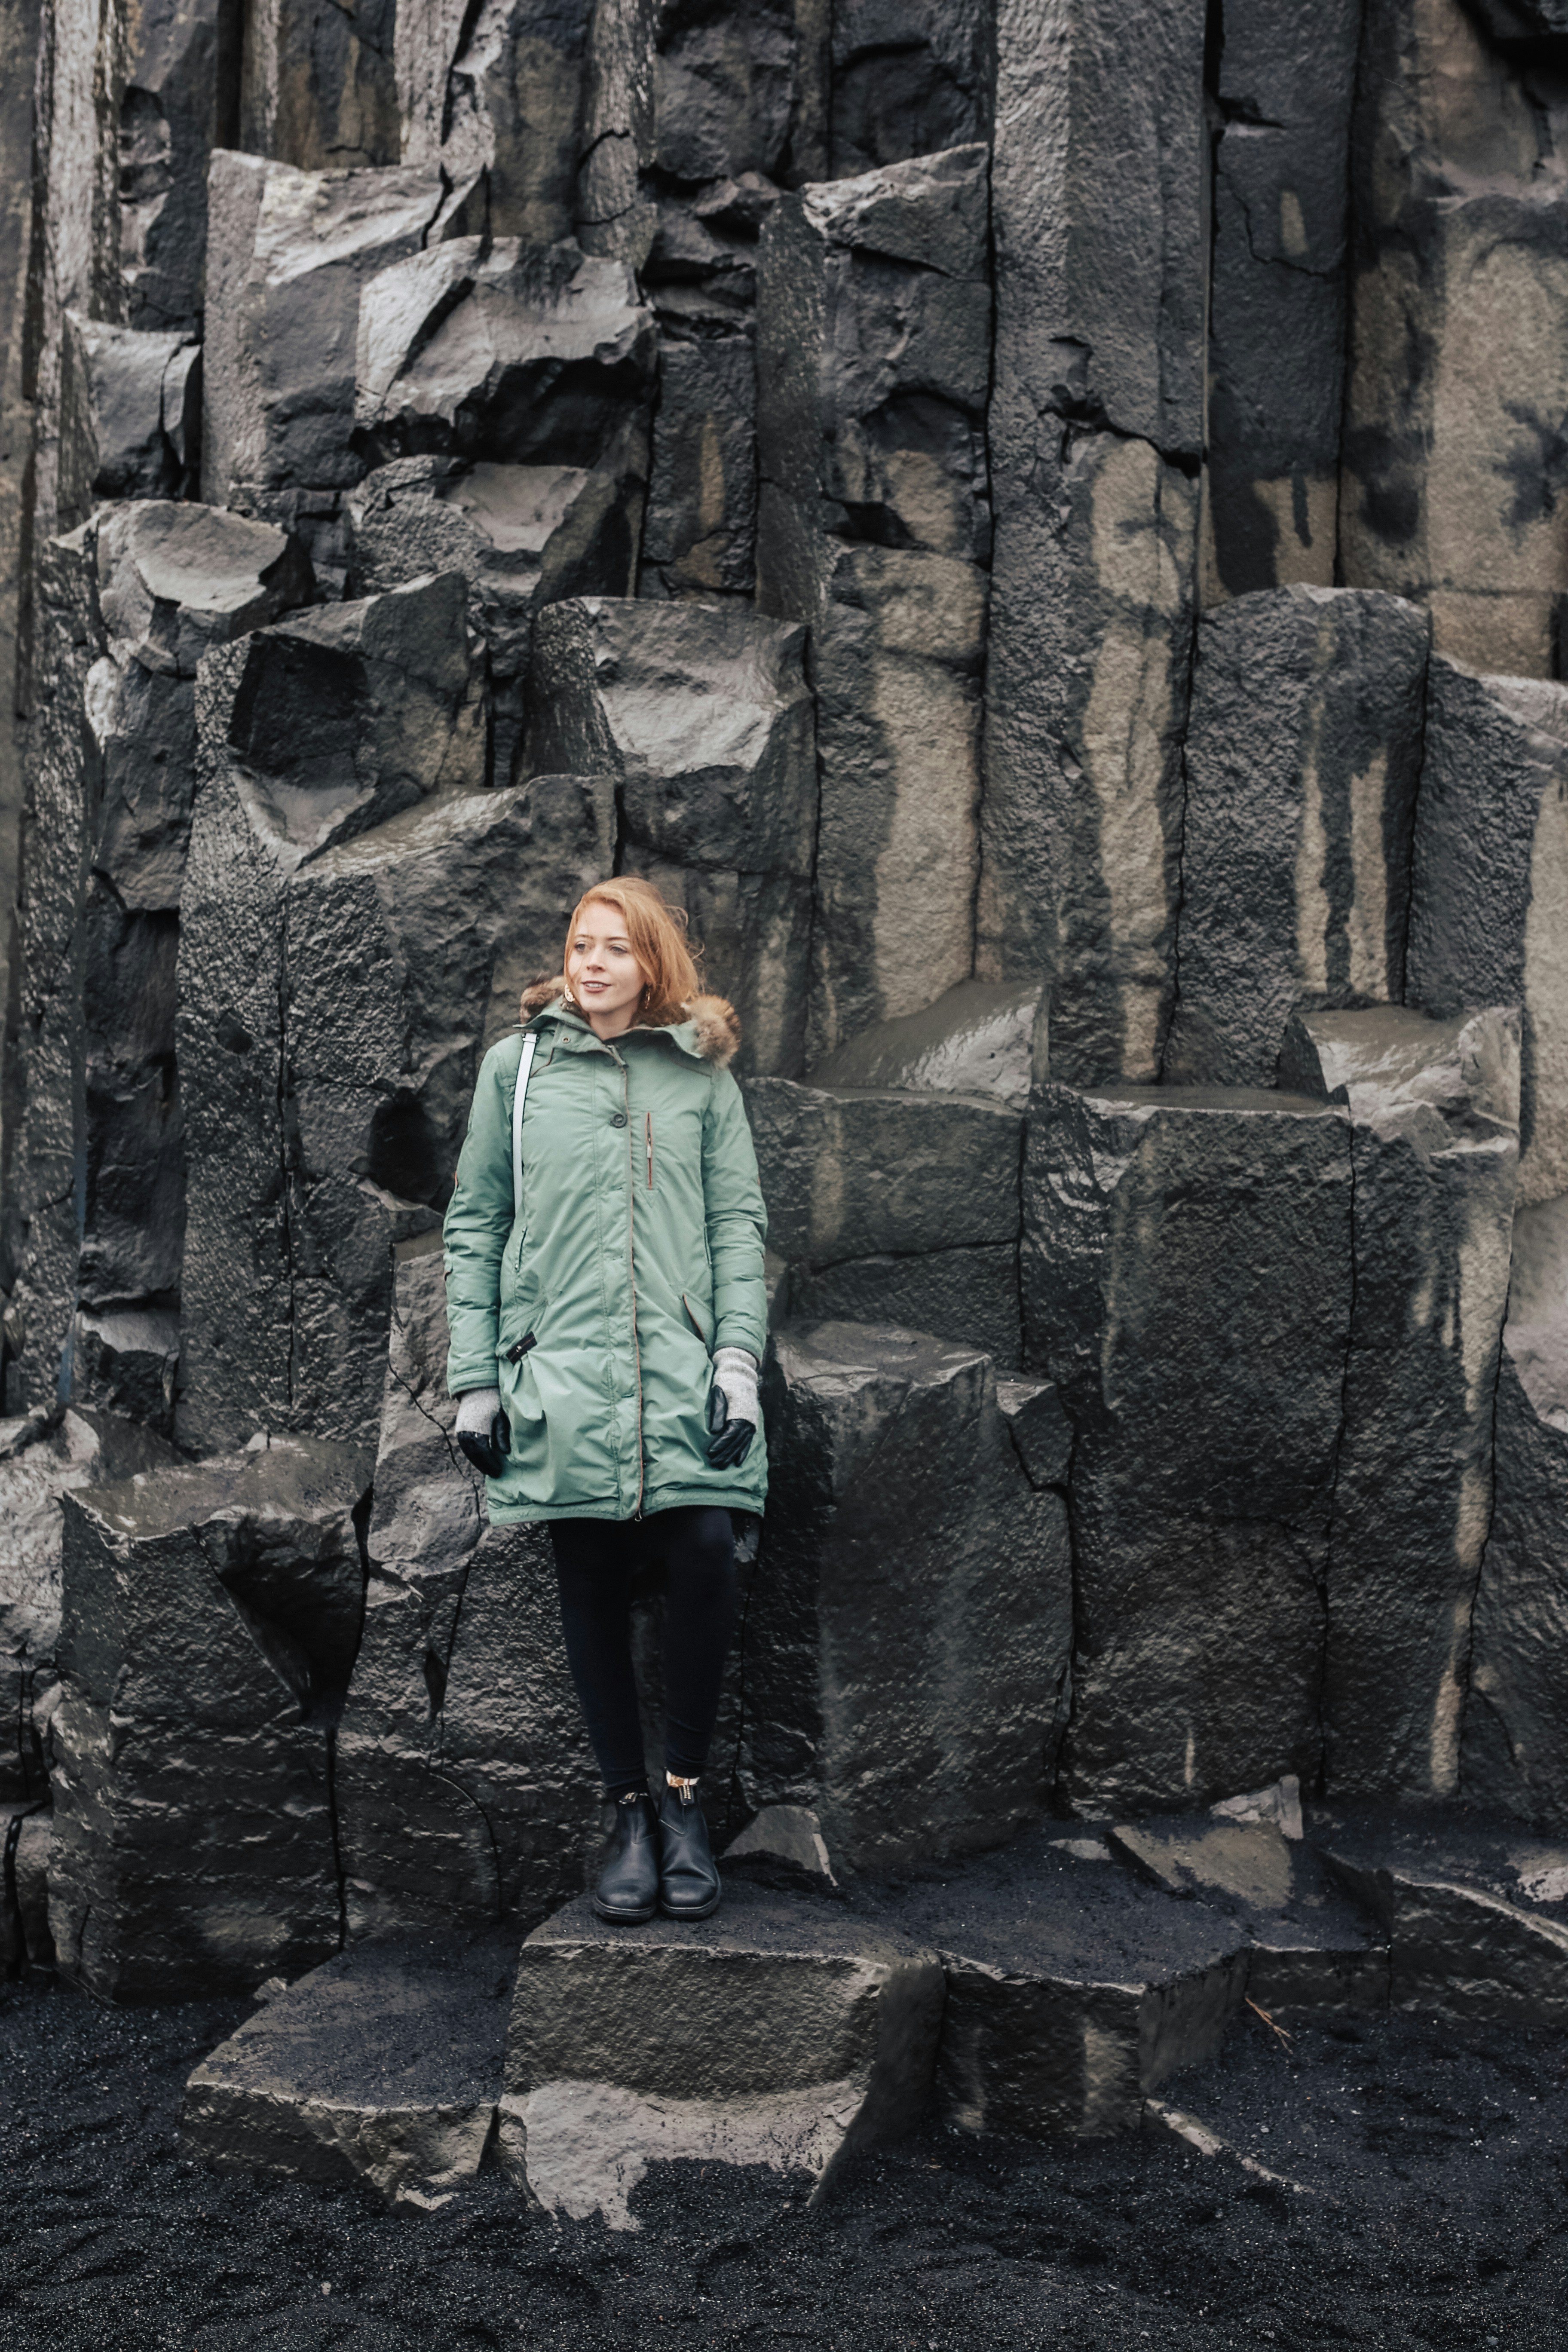 Exploring the infamous Reynisdrangar basalt sea rocks at Reynisfjara Beach in South Iceland.